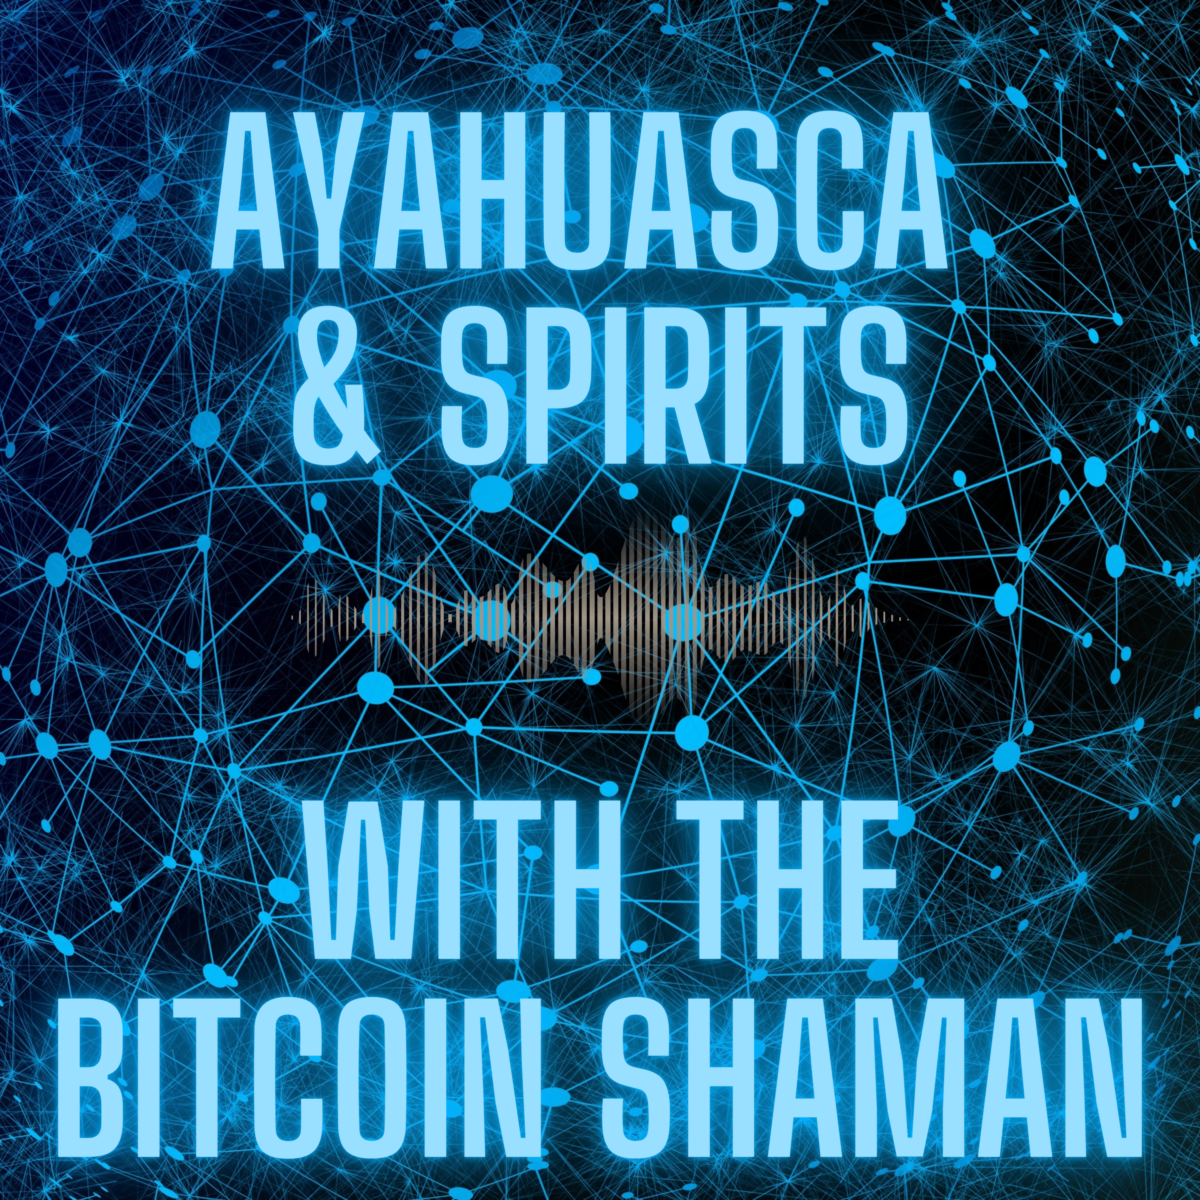 Ayahuasca and spirits with the Bitcoin Shaman